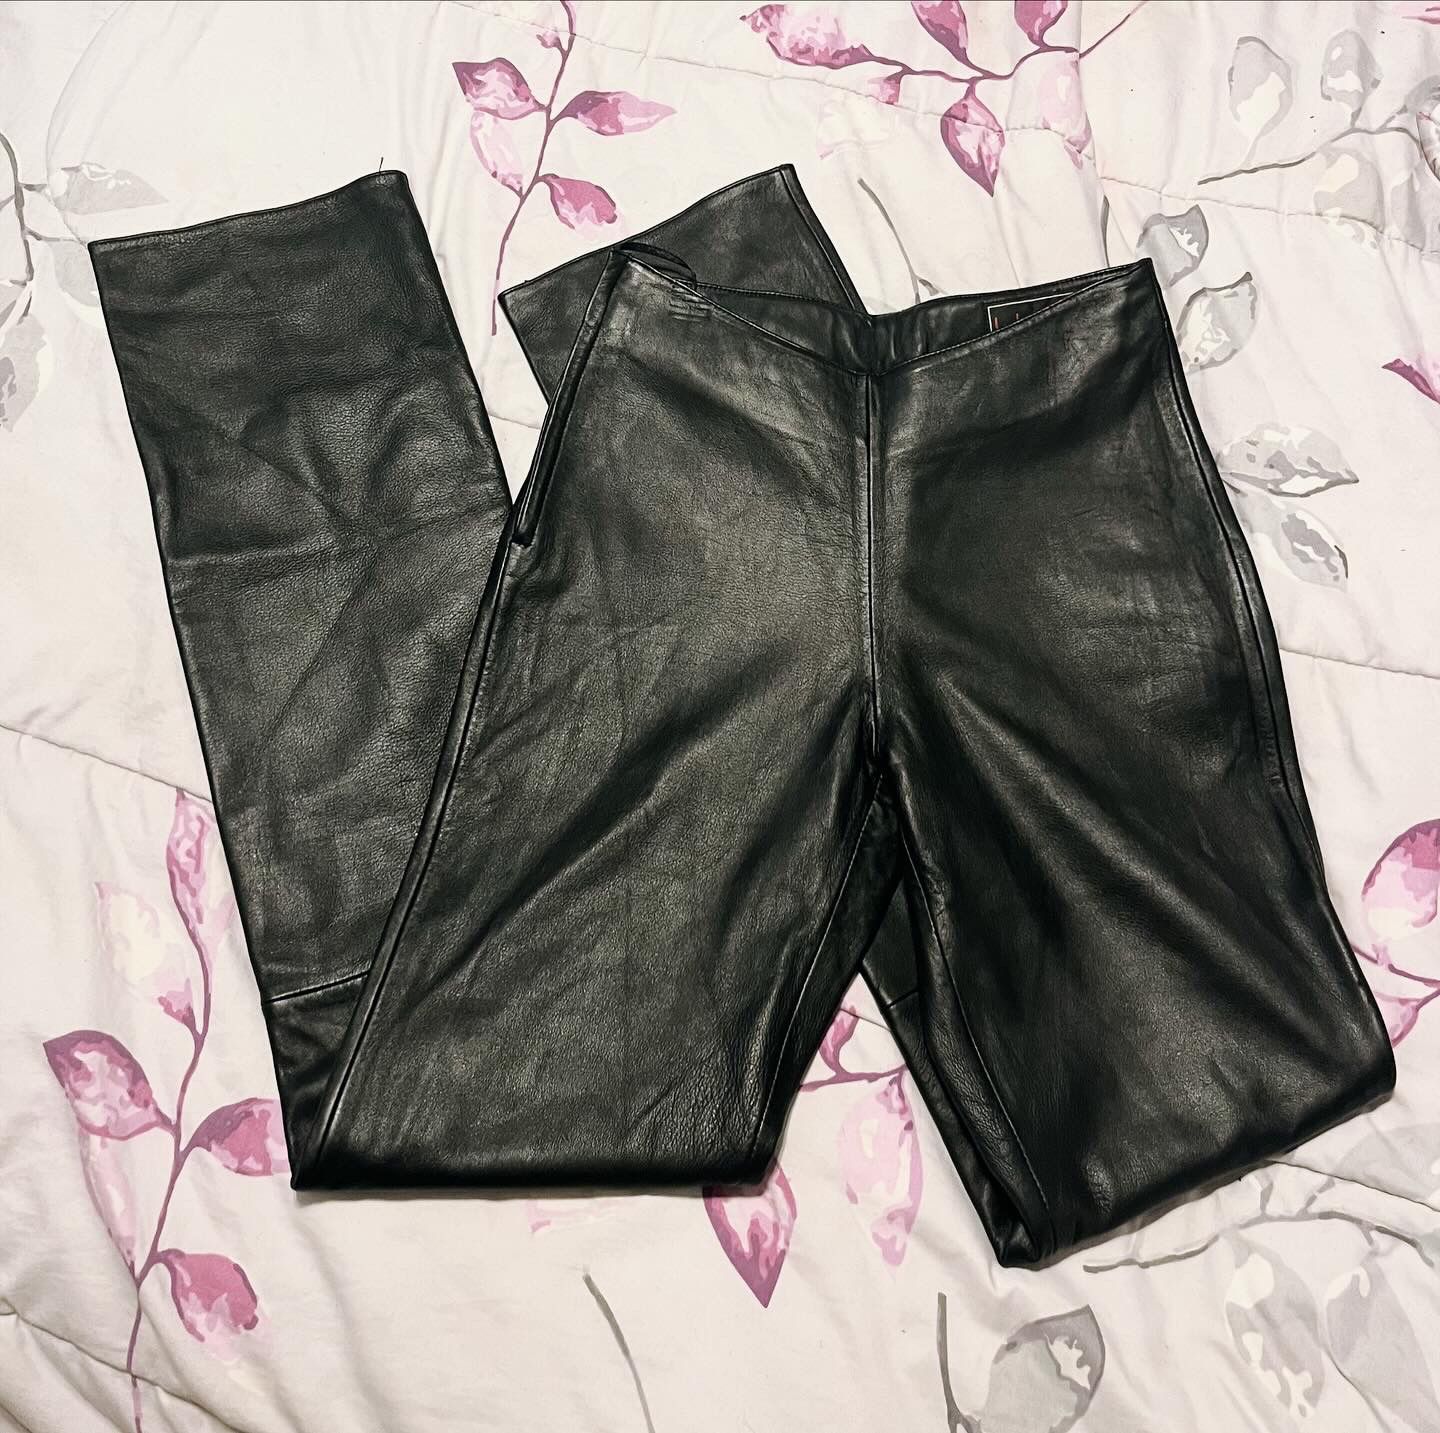 NWOT! Genuine Leather Pants